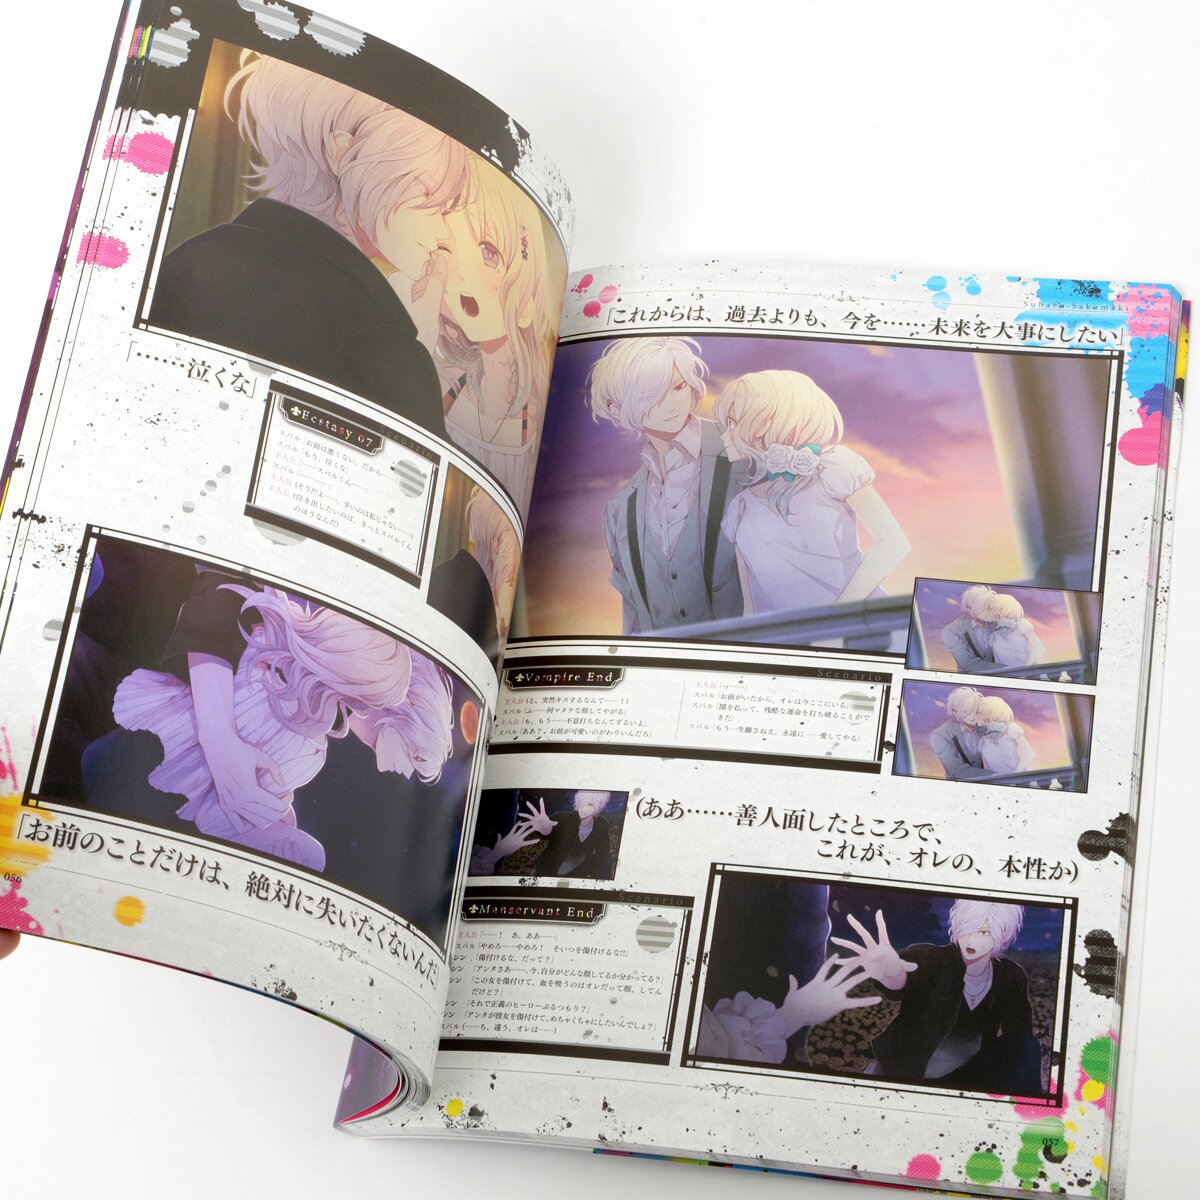 Diabolik Lovers: Dark Fate Official Visual Fan Book